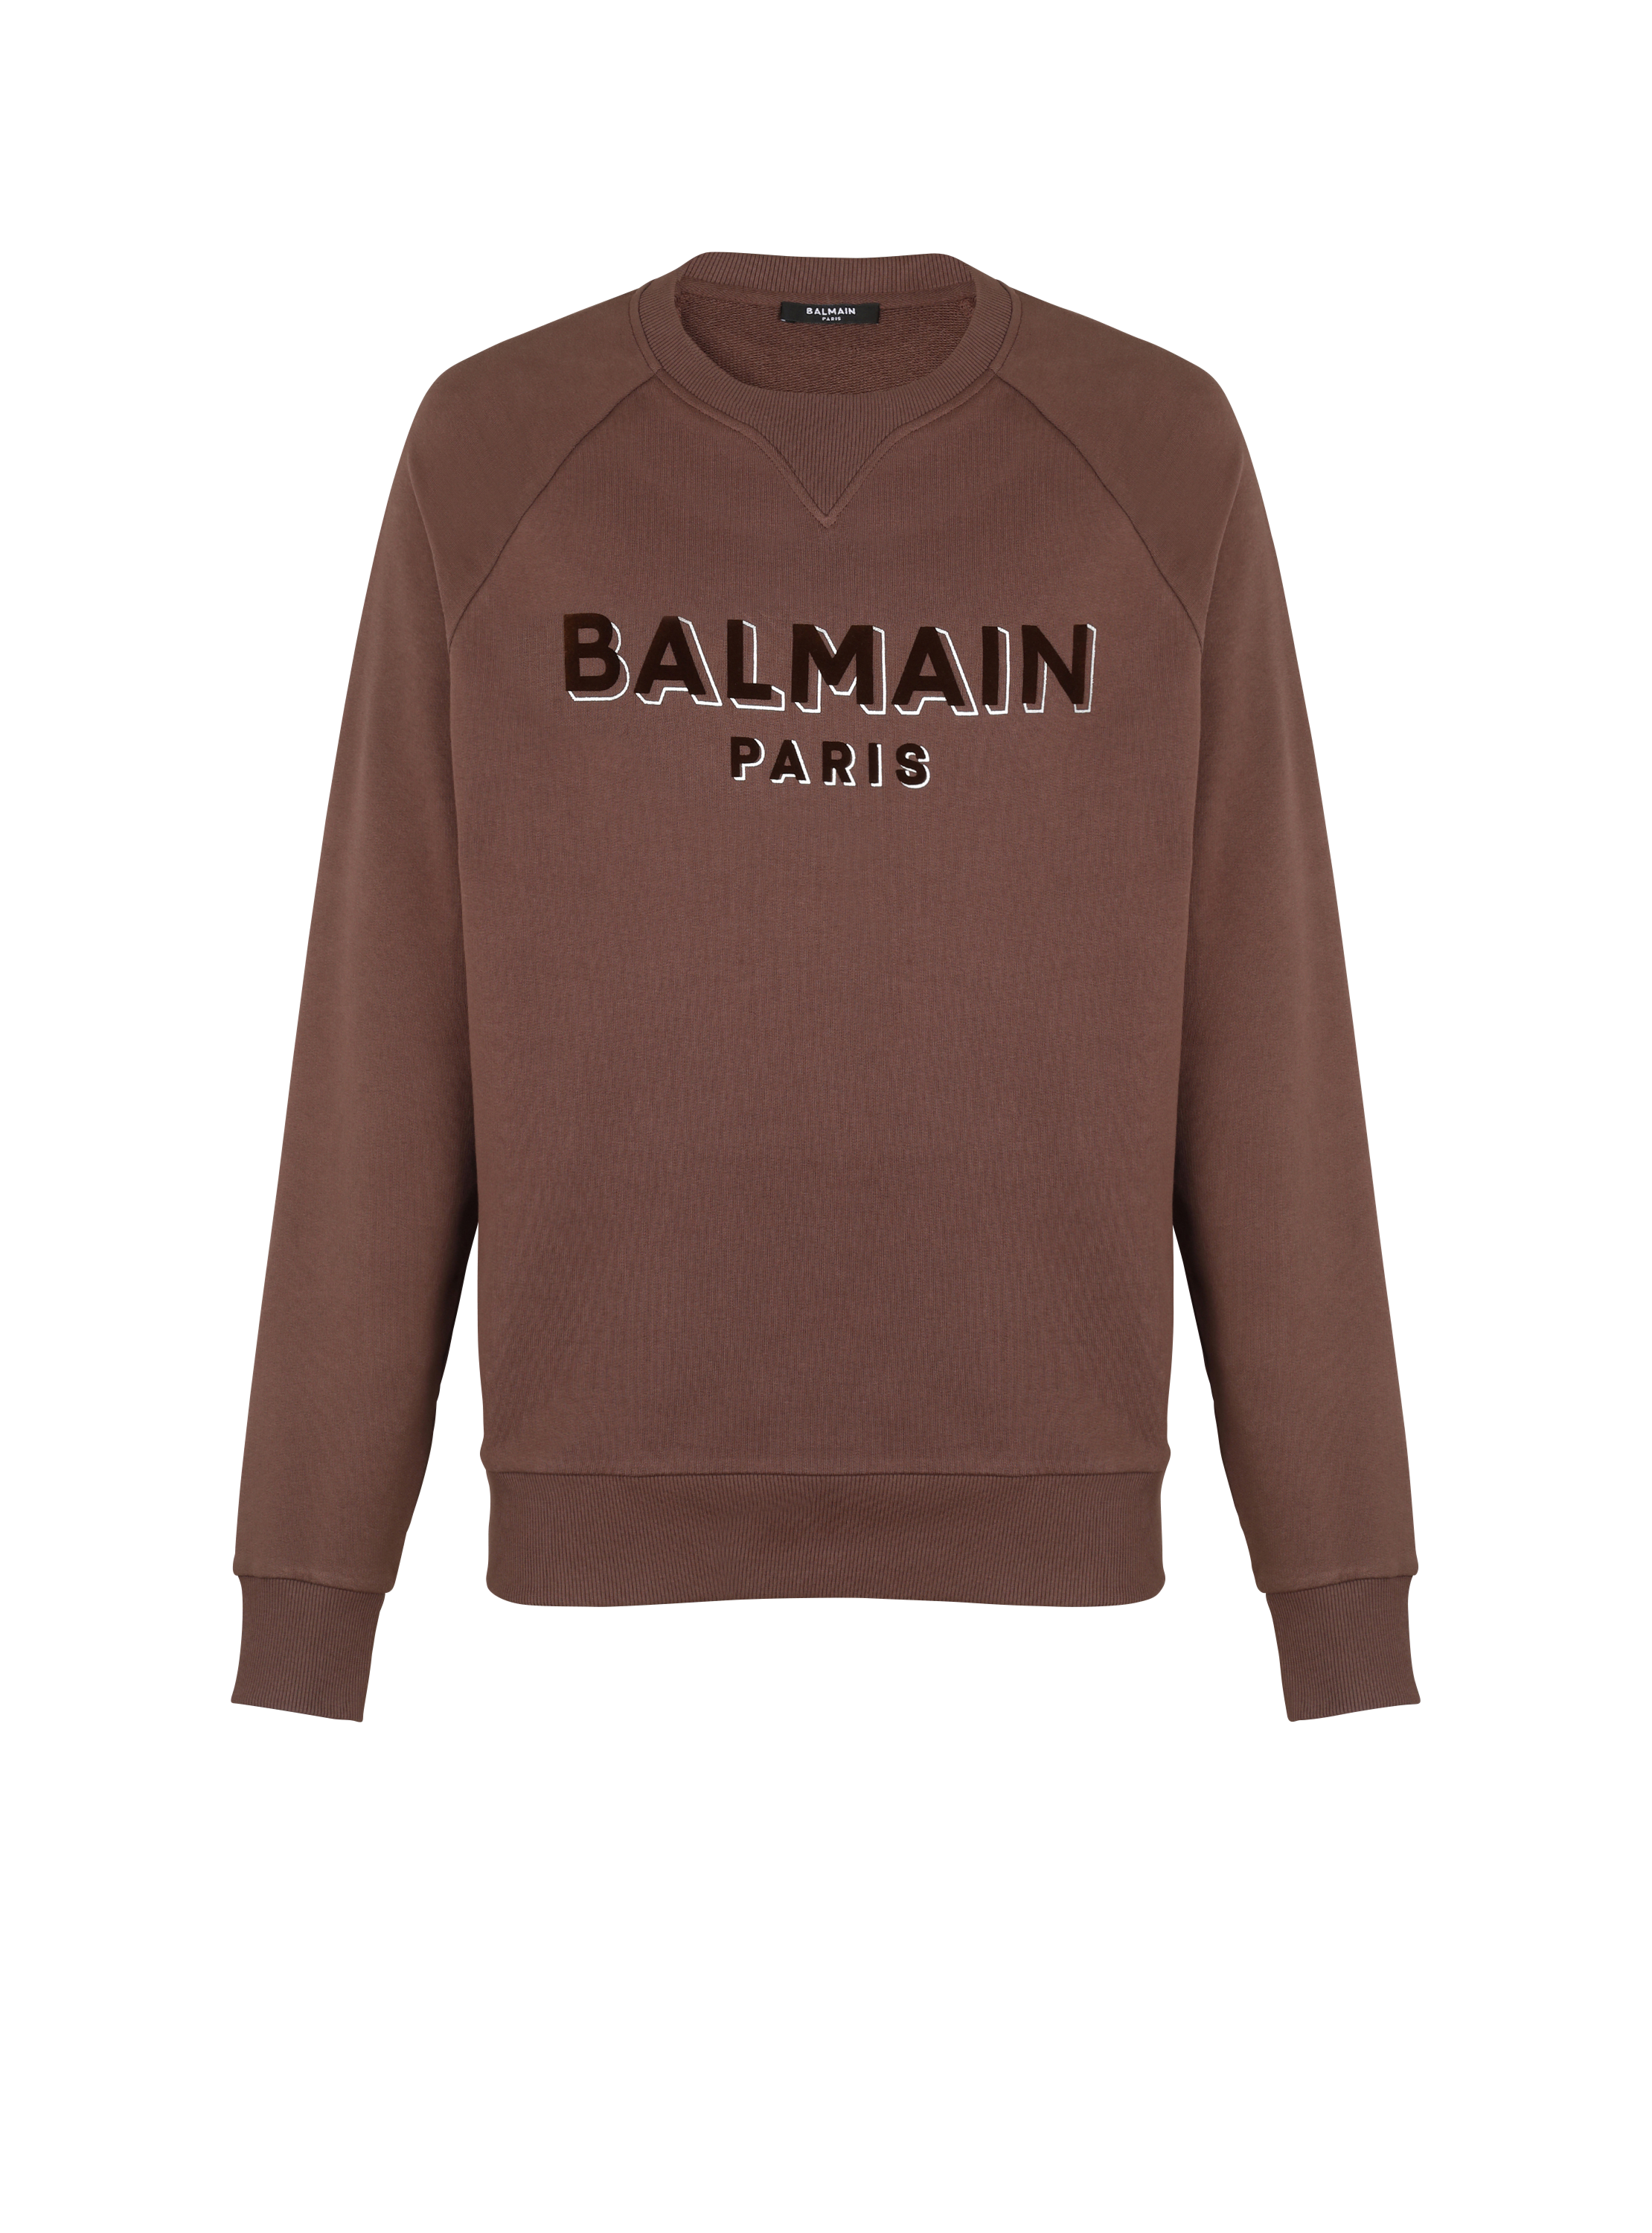 Flocked Balmain logo sweatshirt